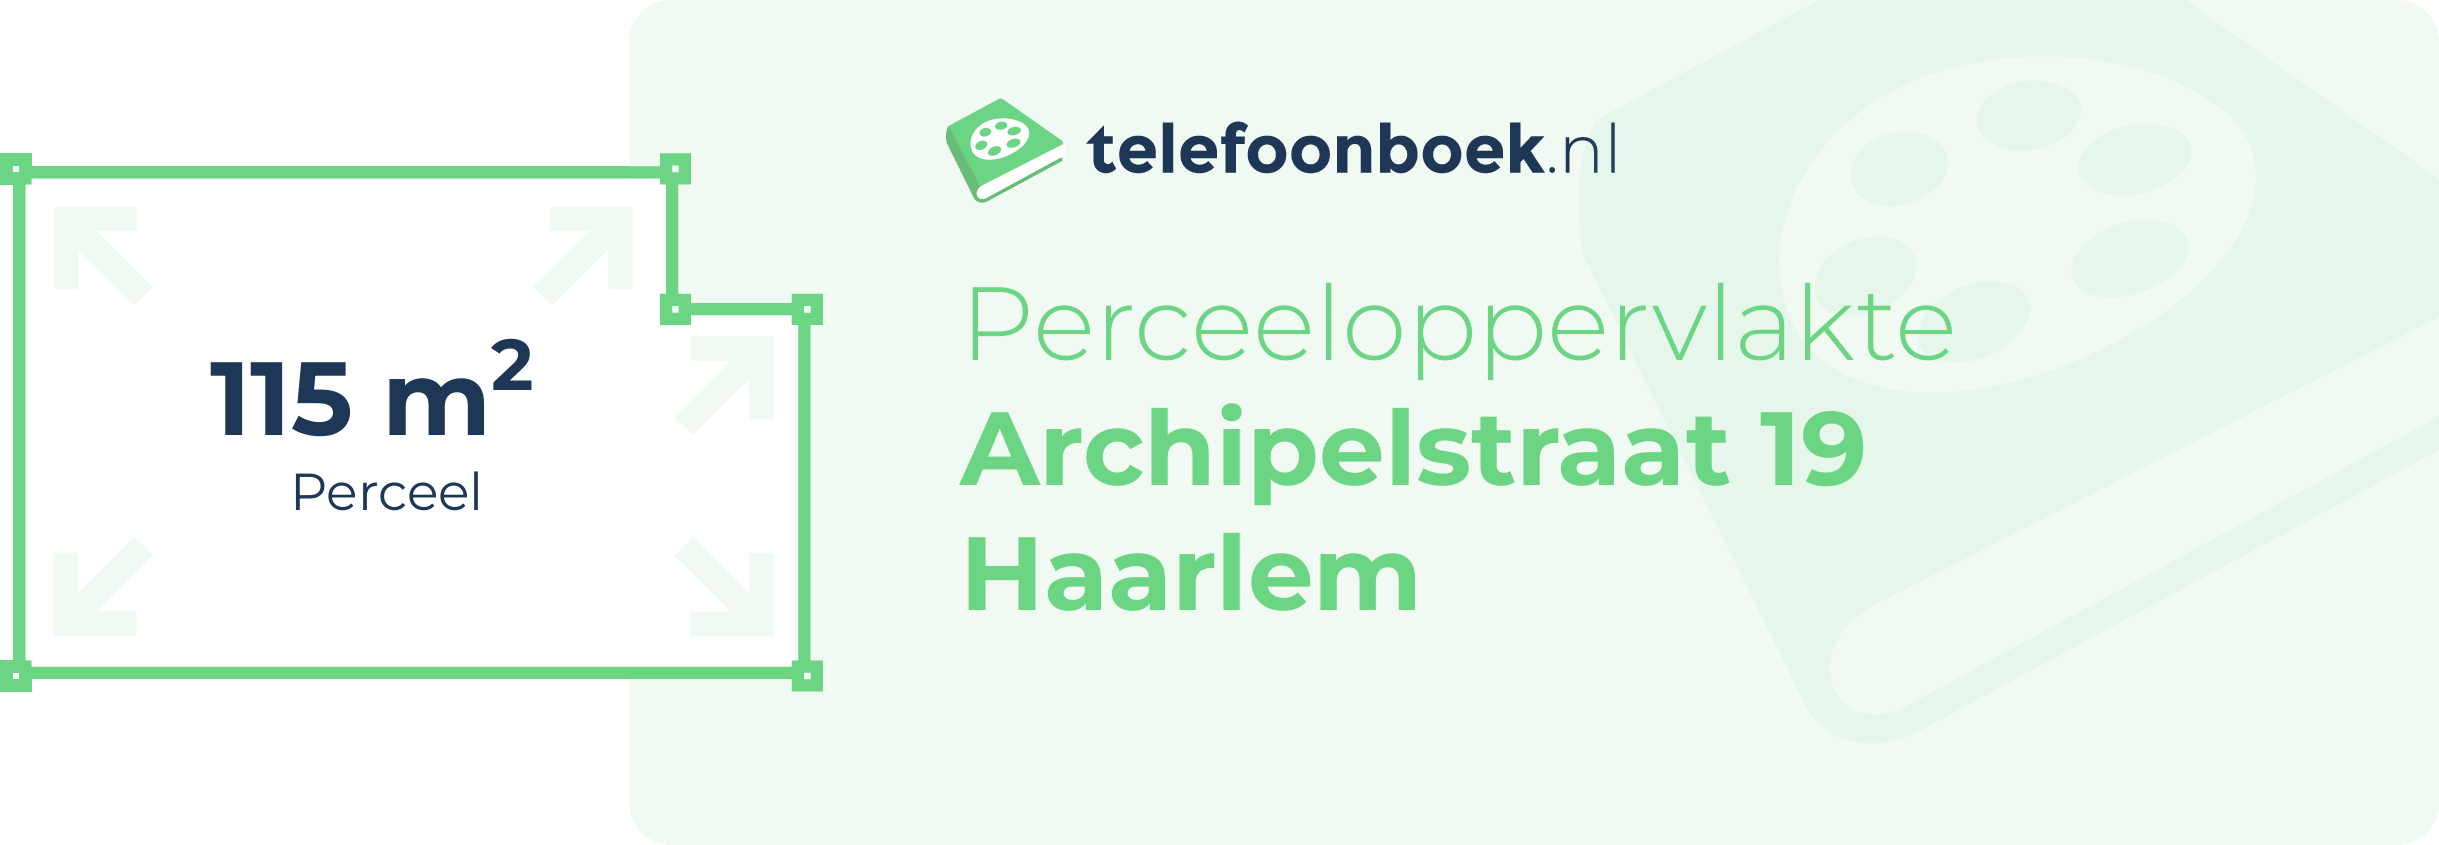 Perceeloppervlakte Archipelstraat 19 Haarlem